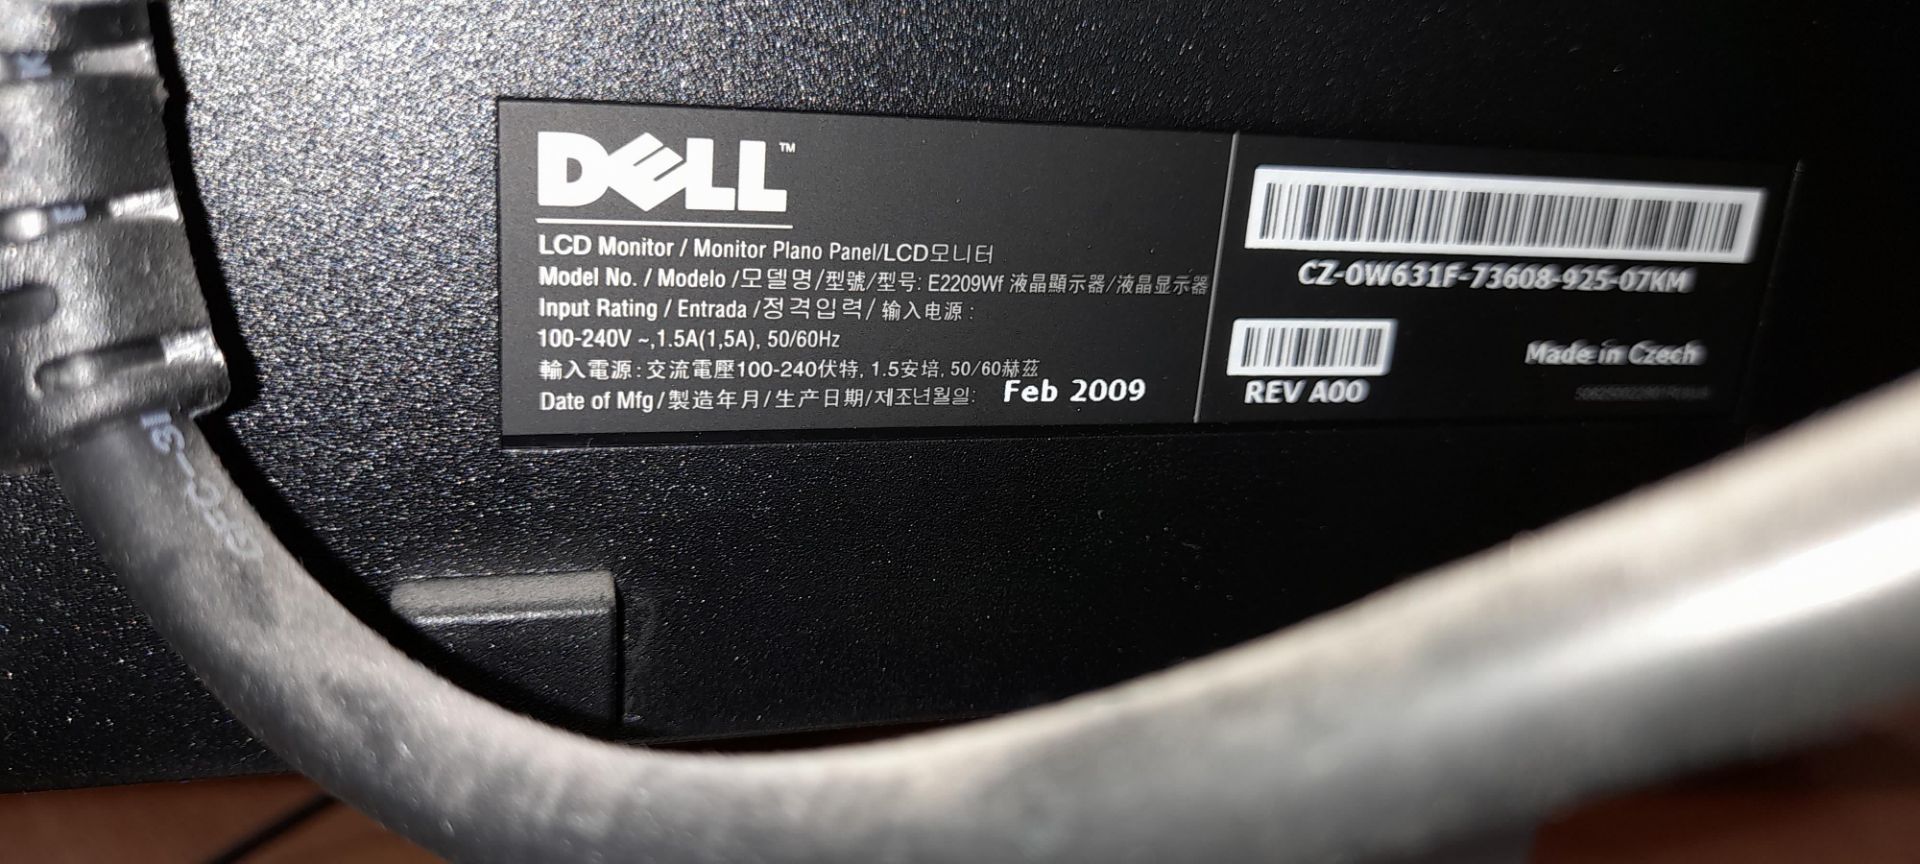 3x Dell monitors - Image 2 of 6